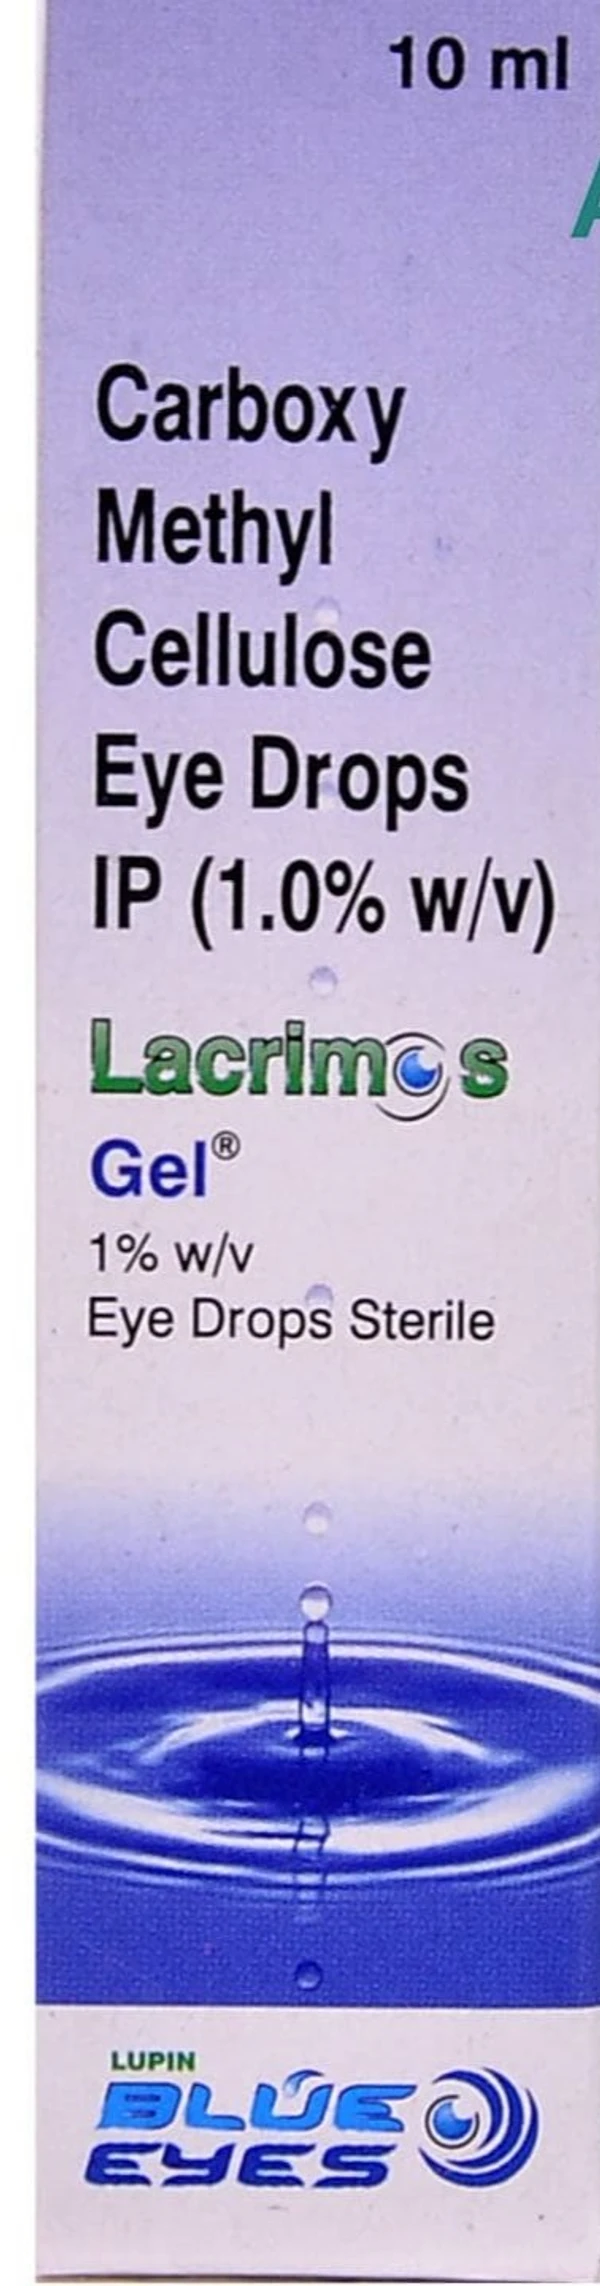 Lacrimos Gel - 10ml